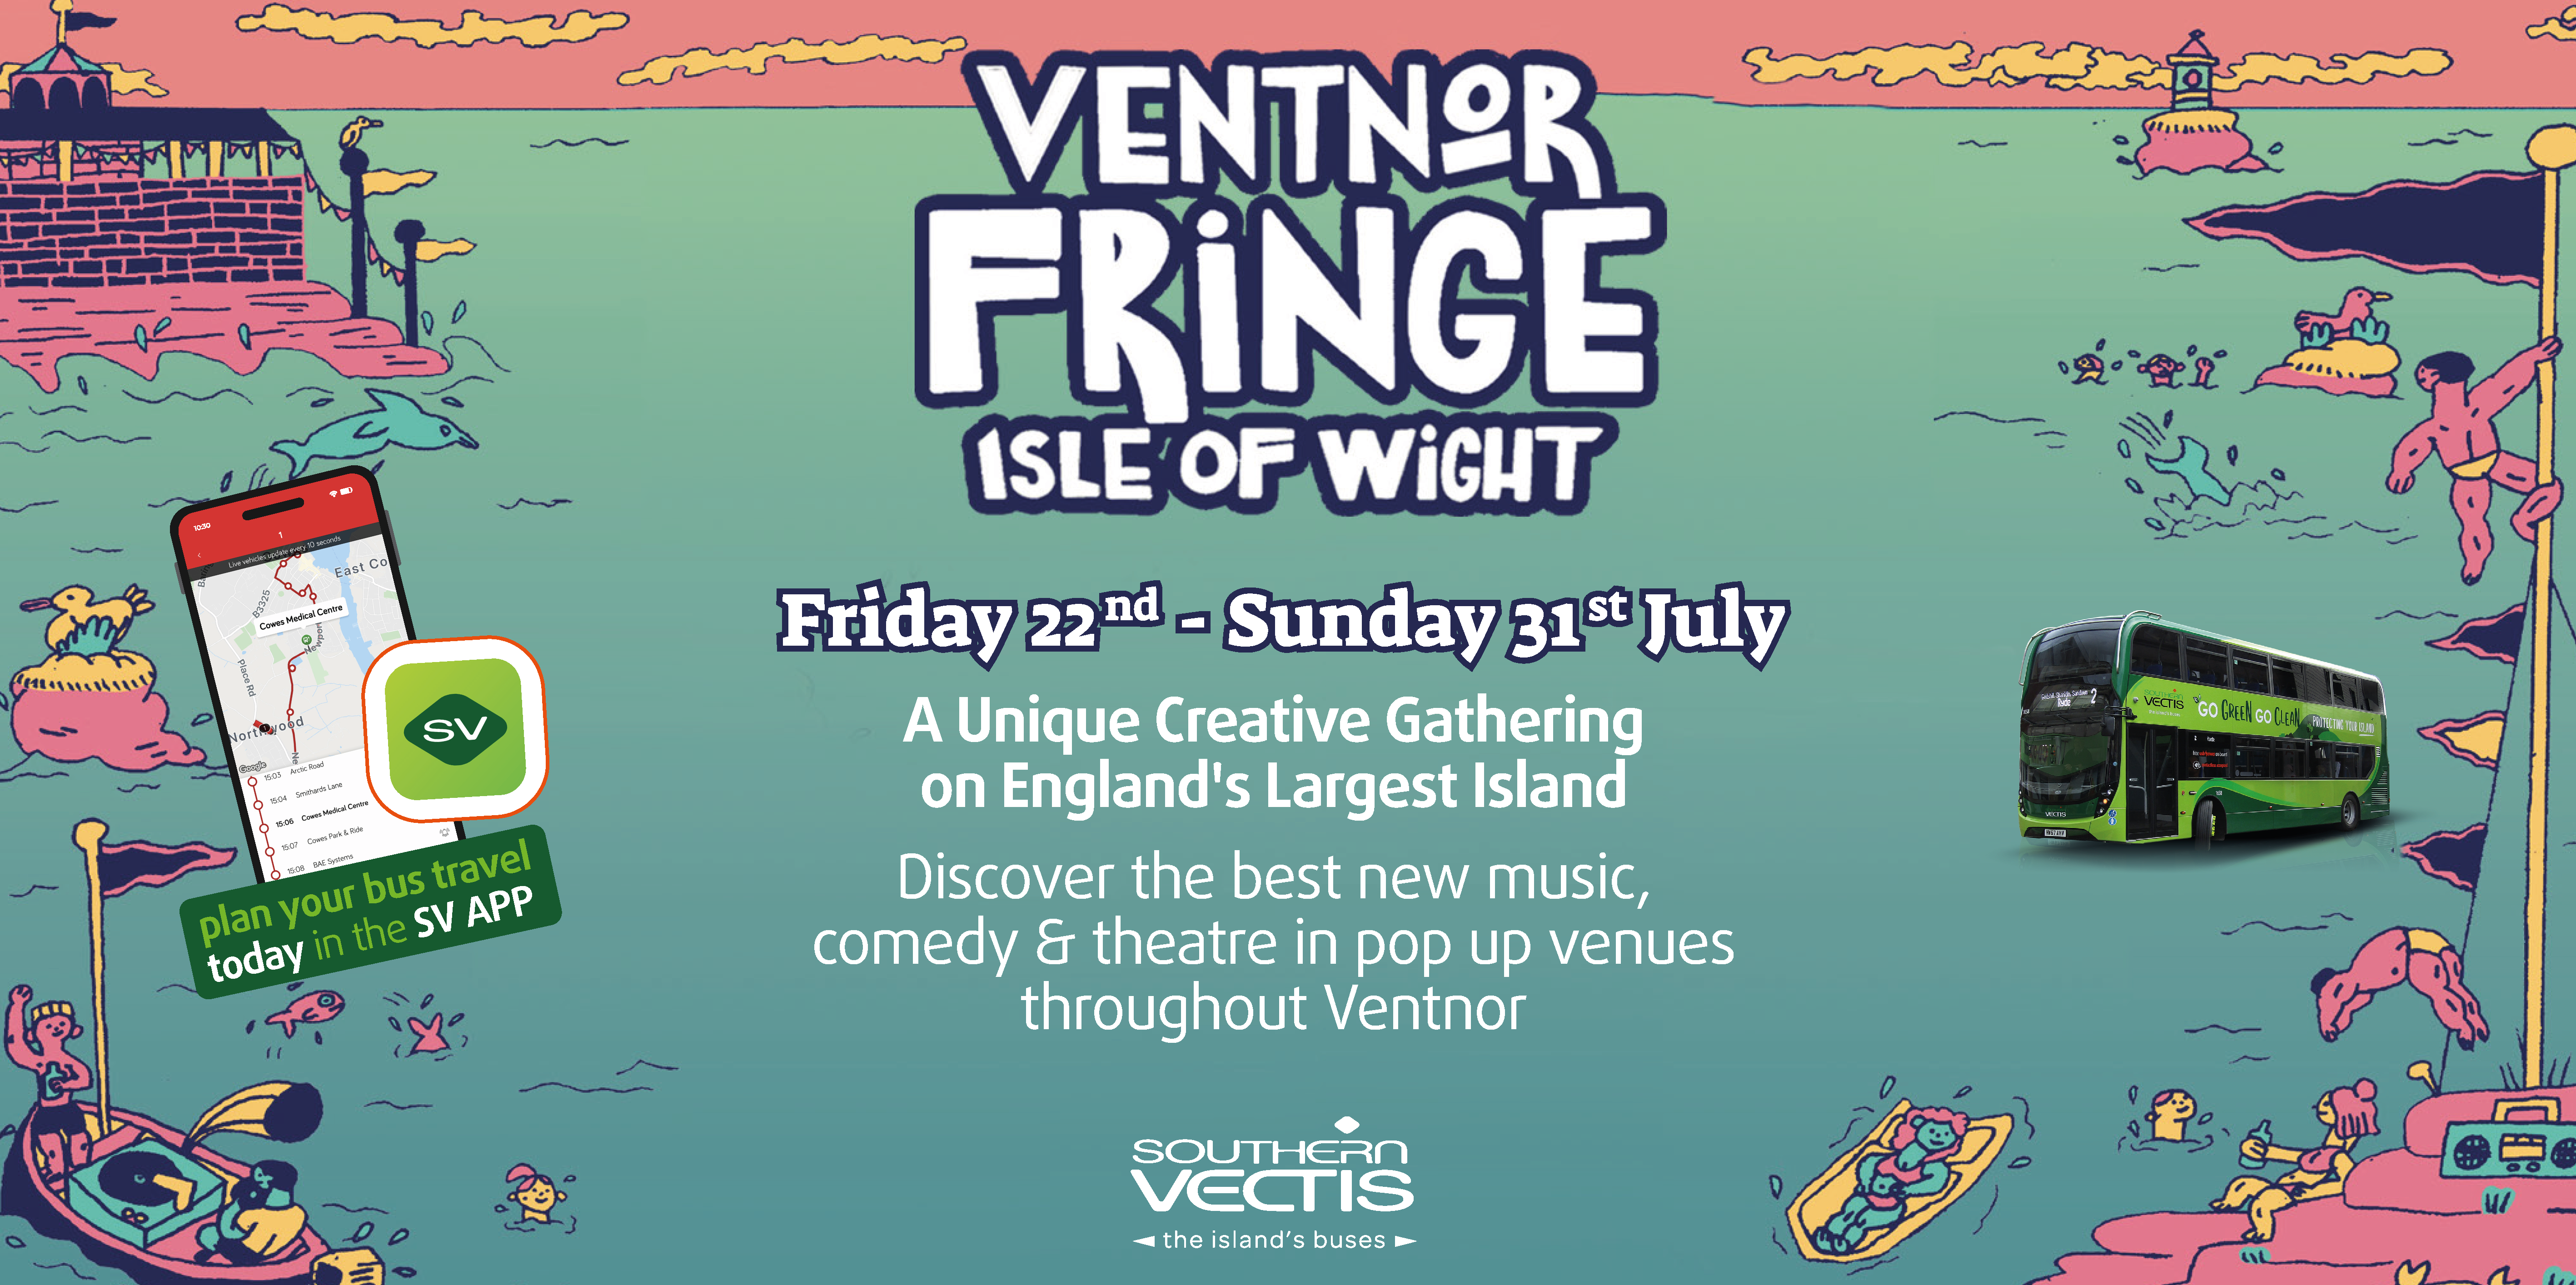 Ventnor Fringe Isle of Wight 